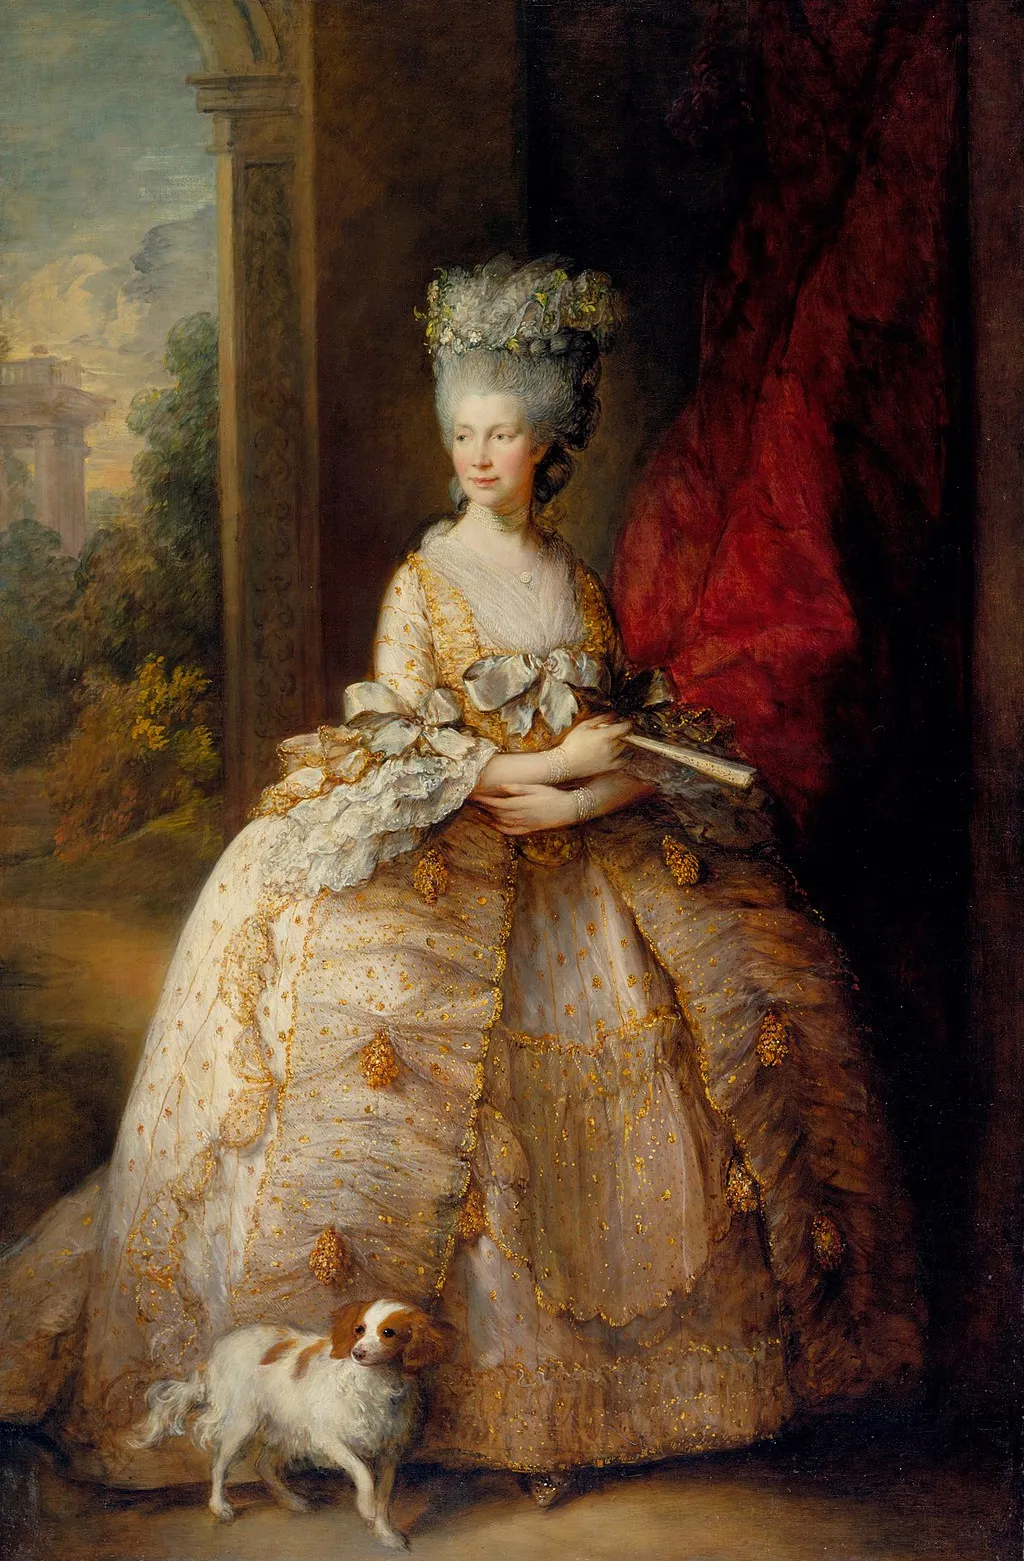 A Thomas Gainsborough portrait of Charlotte